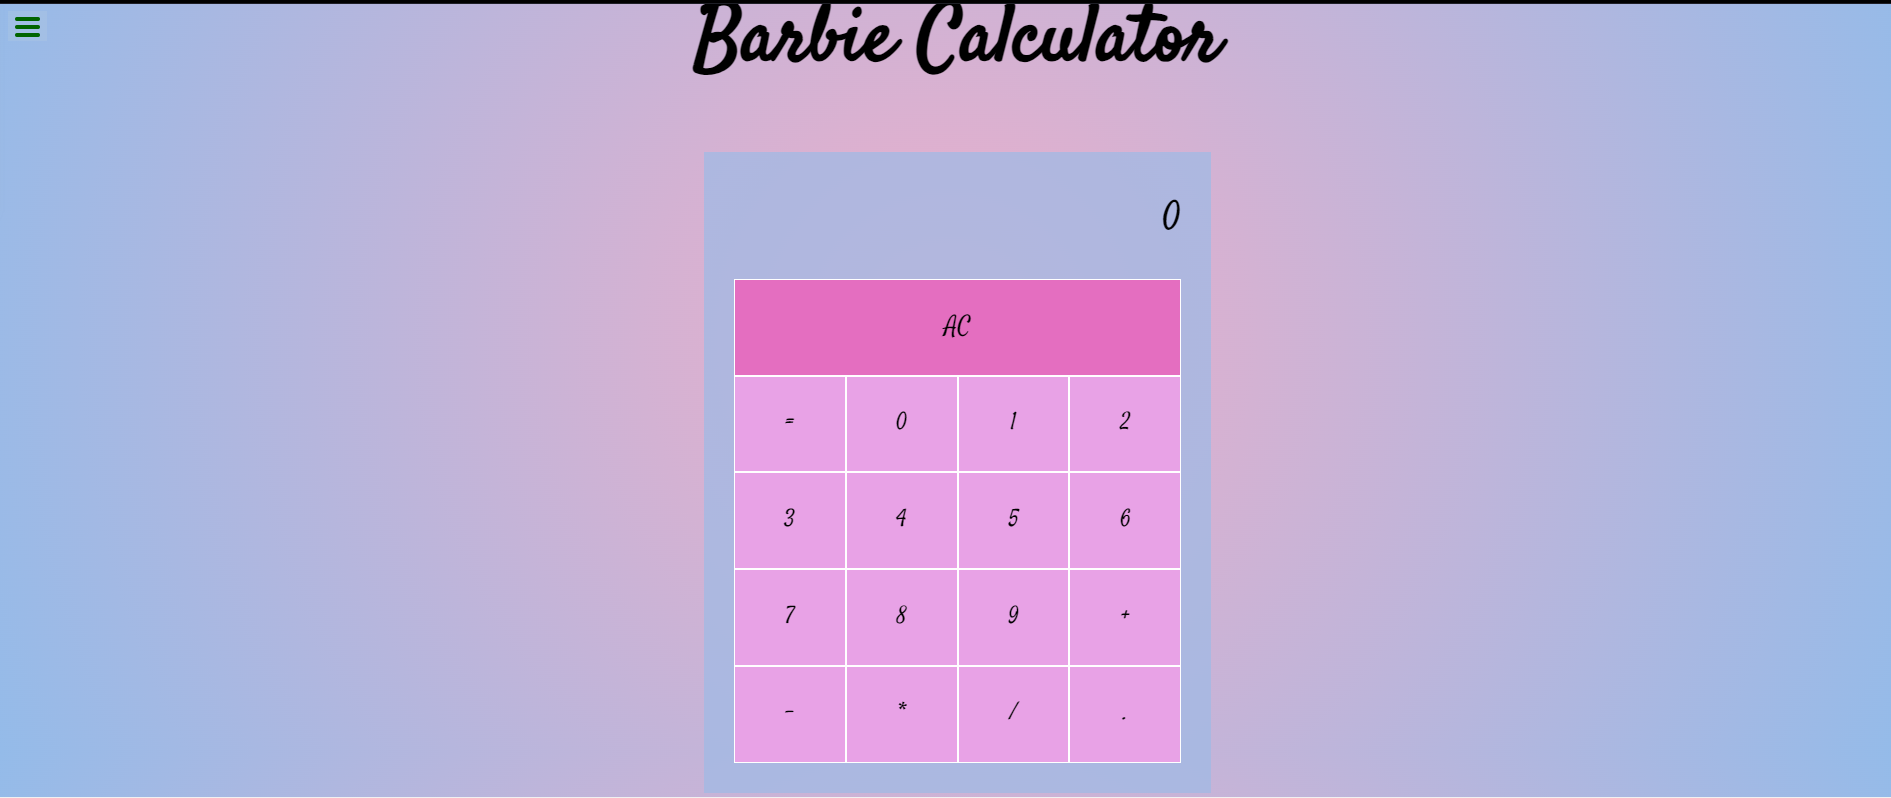 barbie-calculator